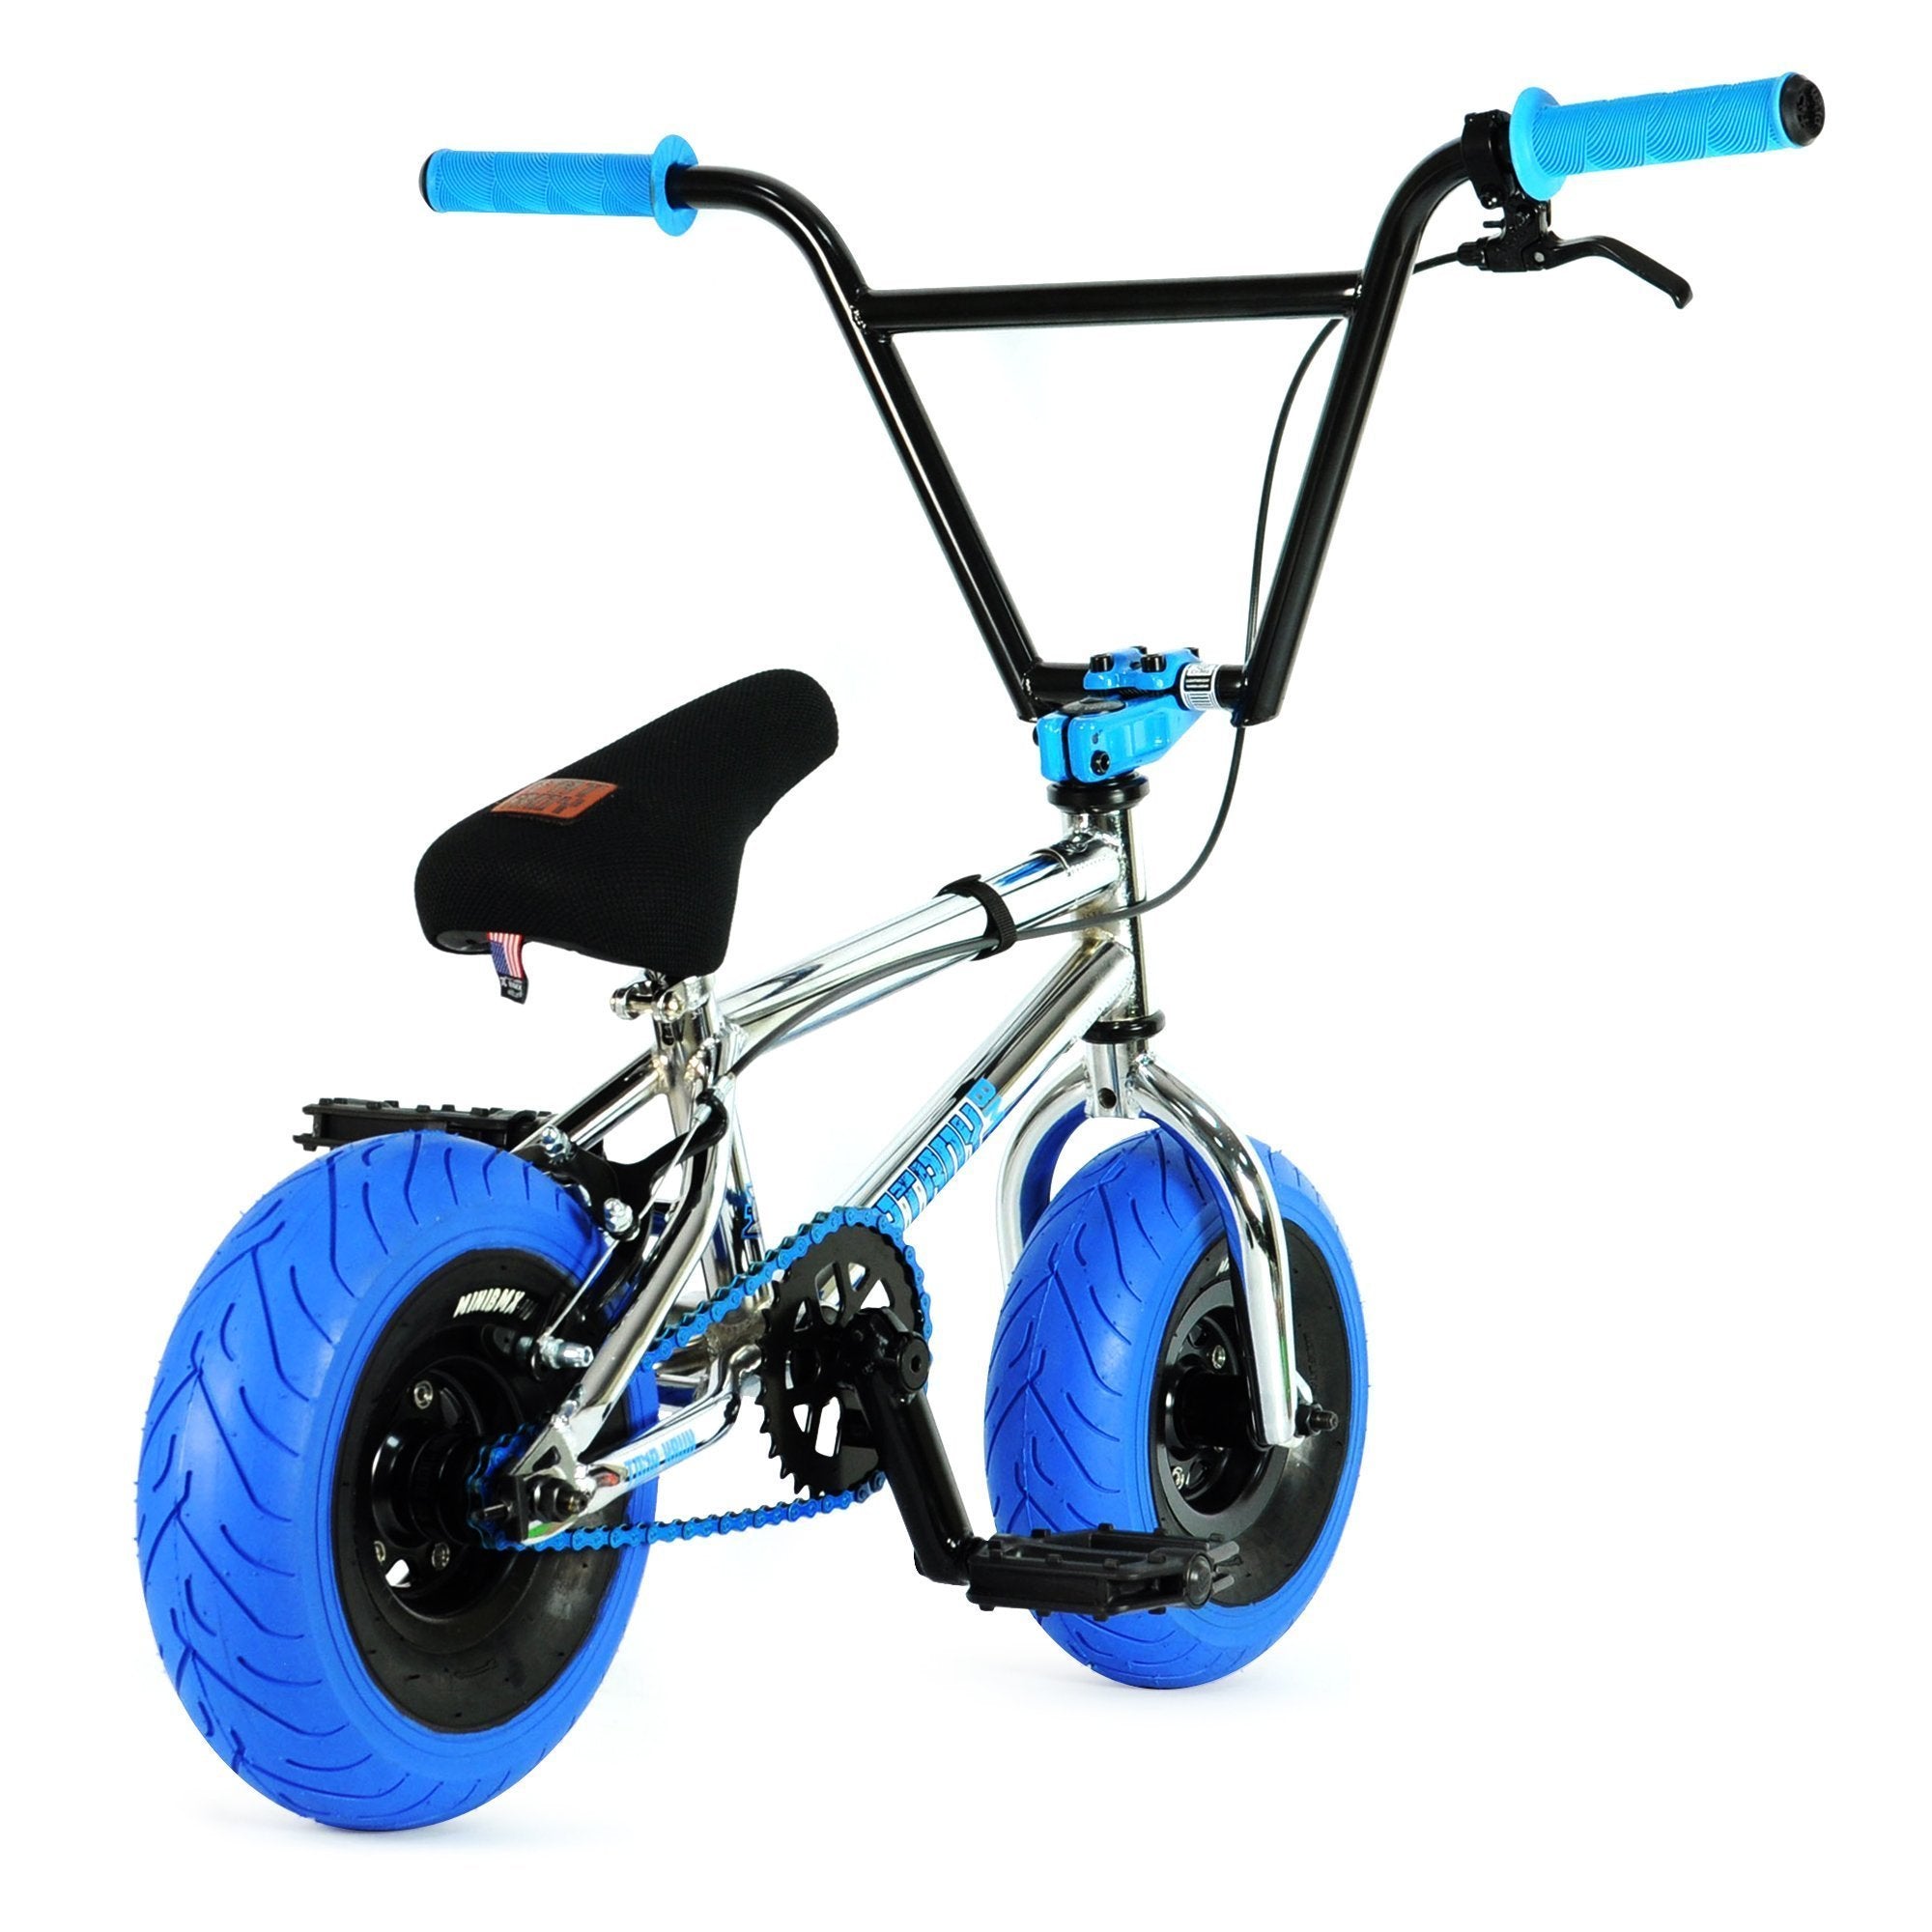 mini bmx stunt bike